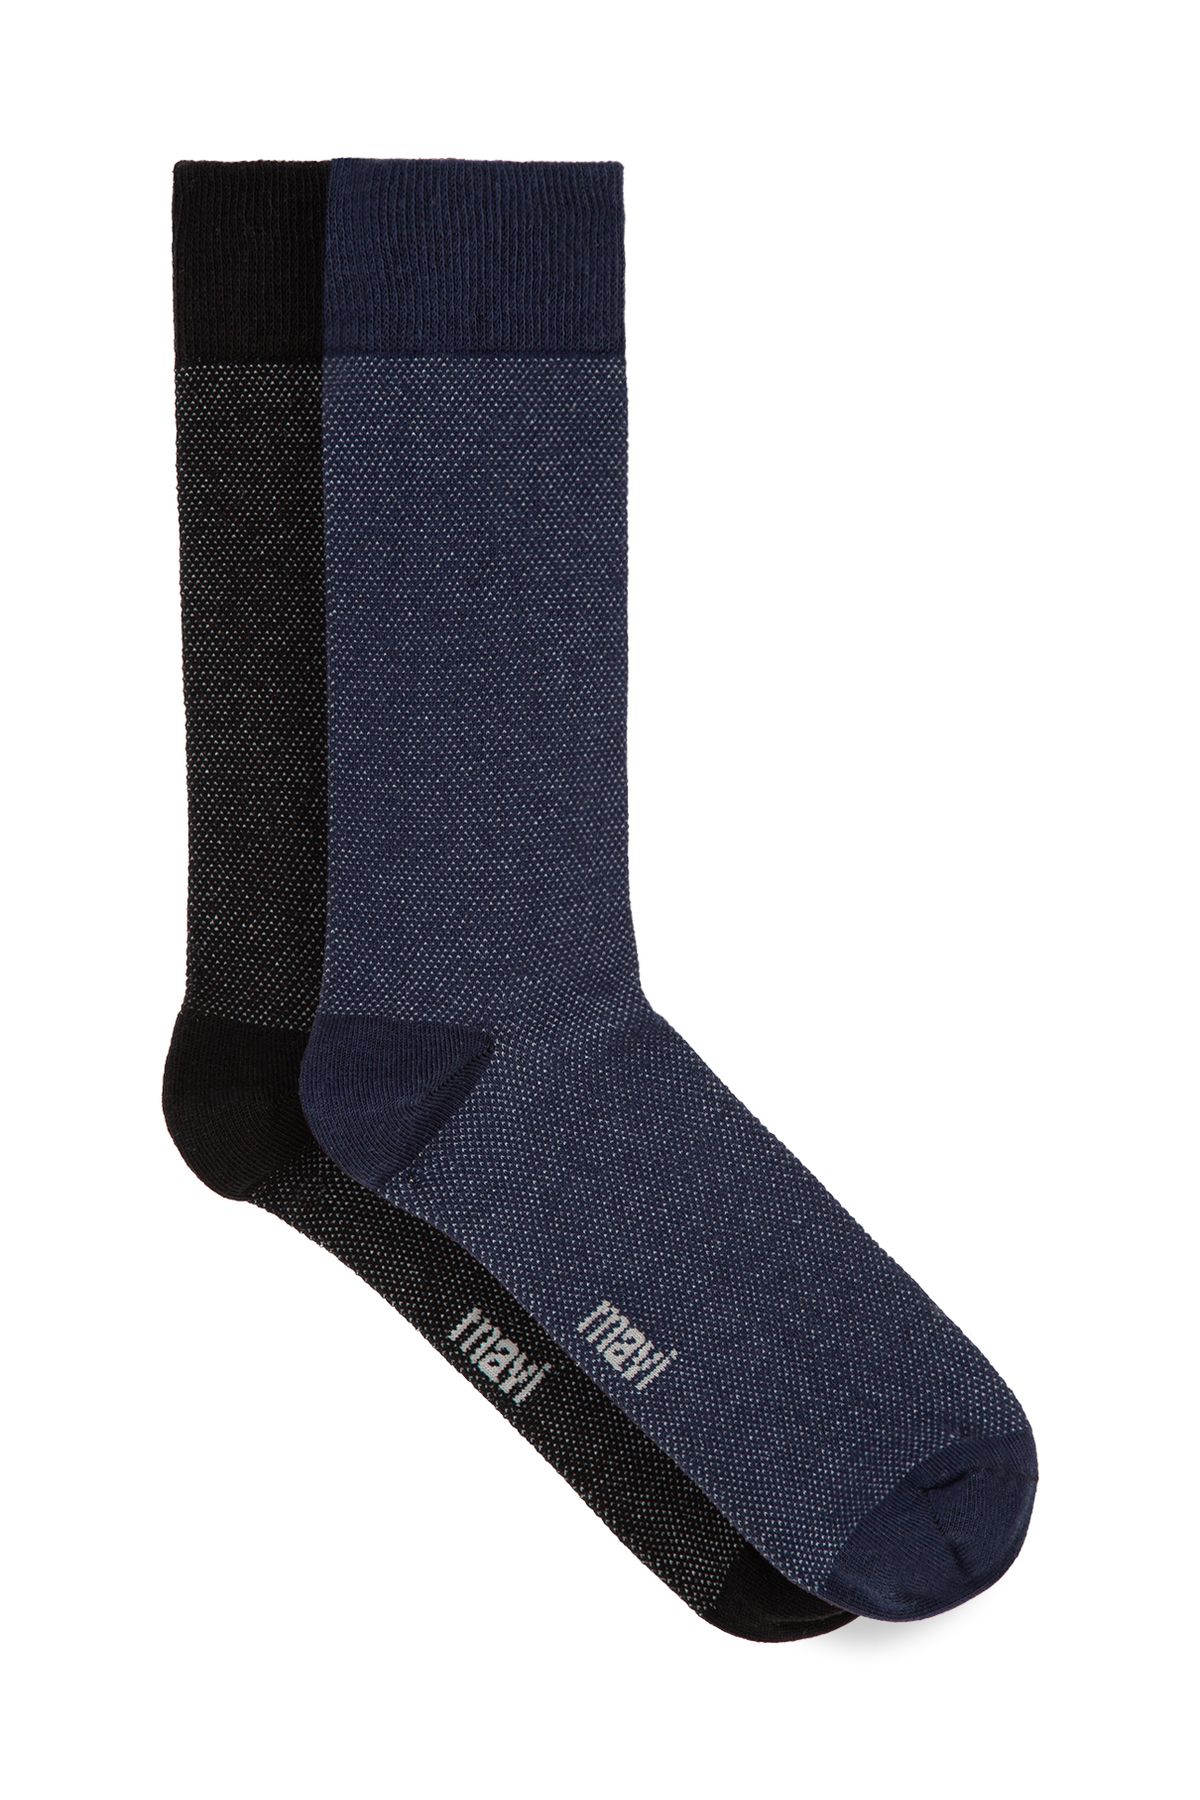 Mavi 2li Lacivert Siyah Soket Çorap 092027-28417